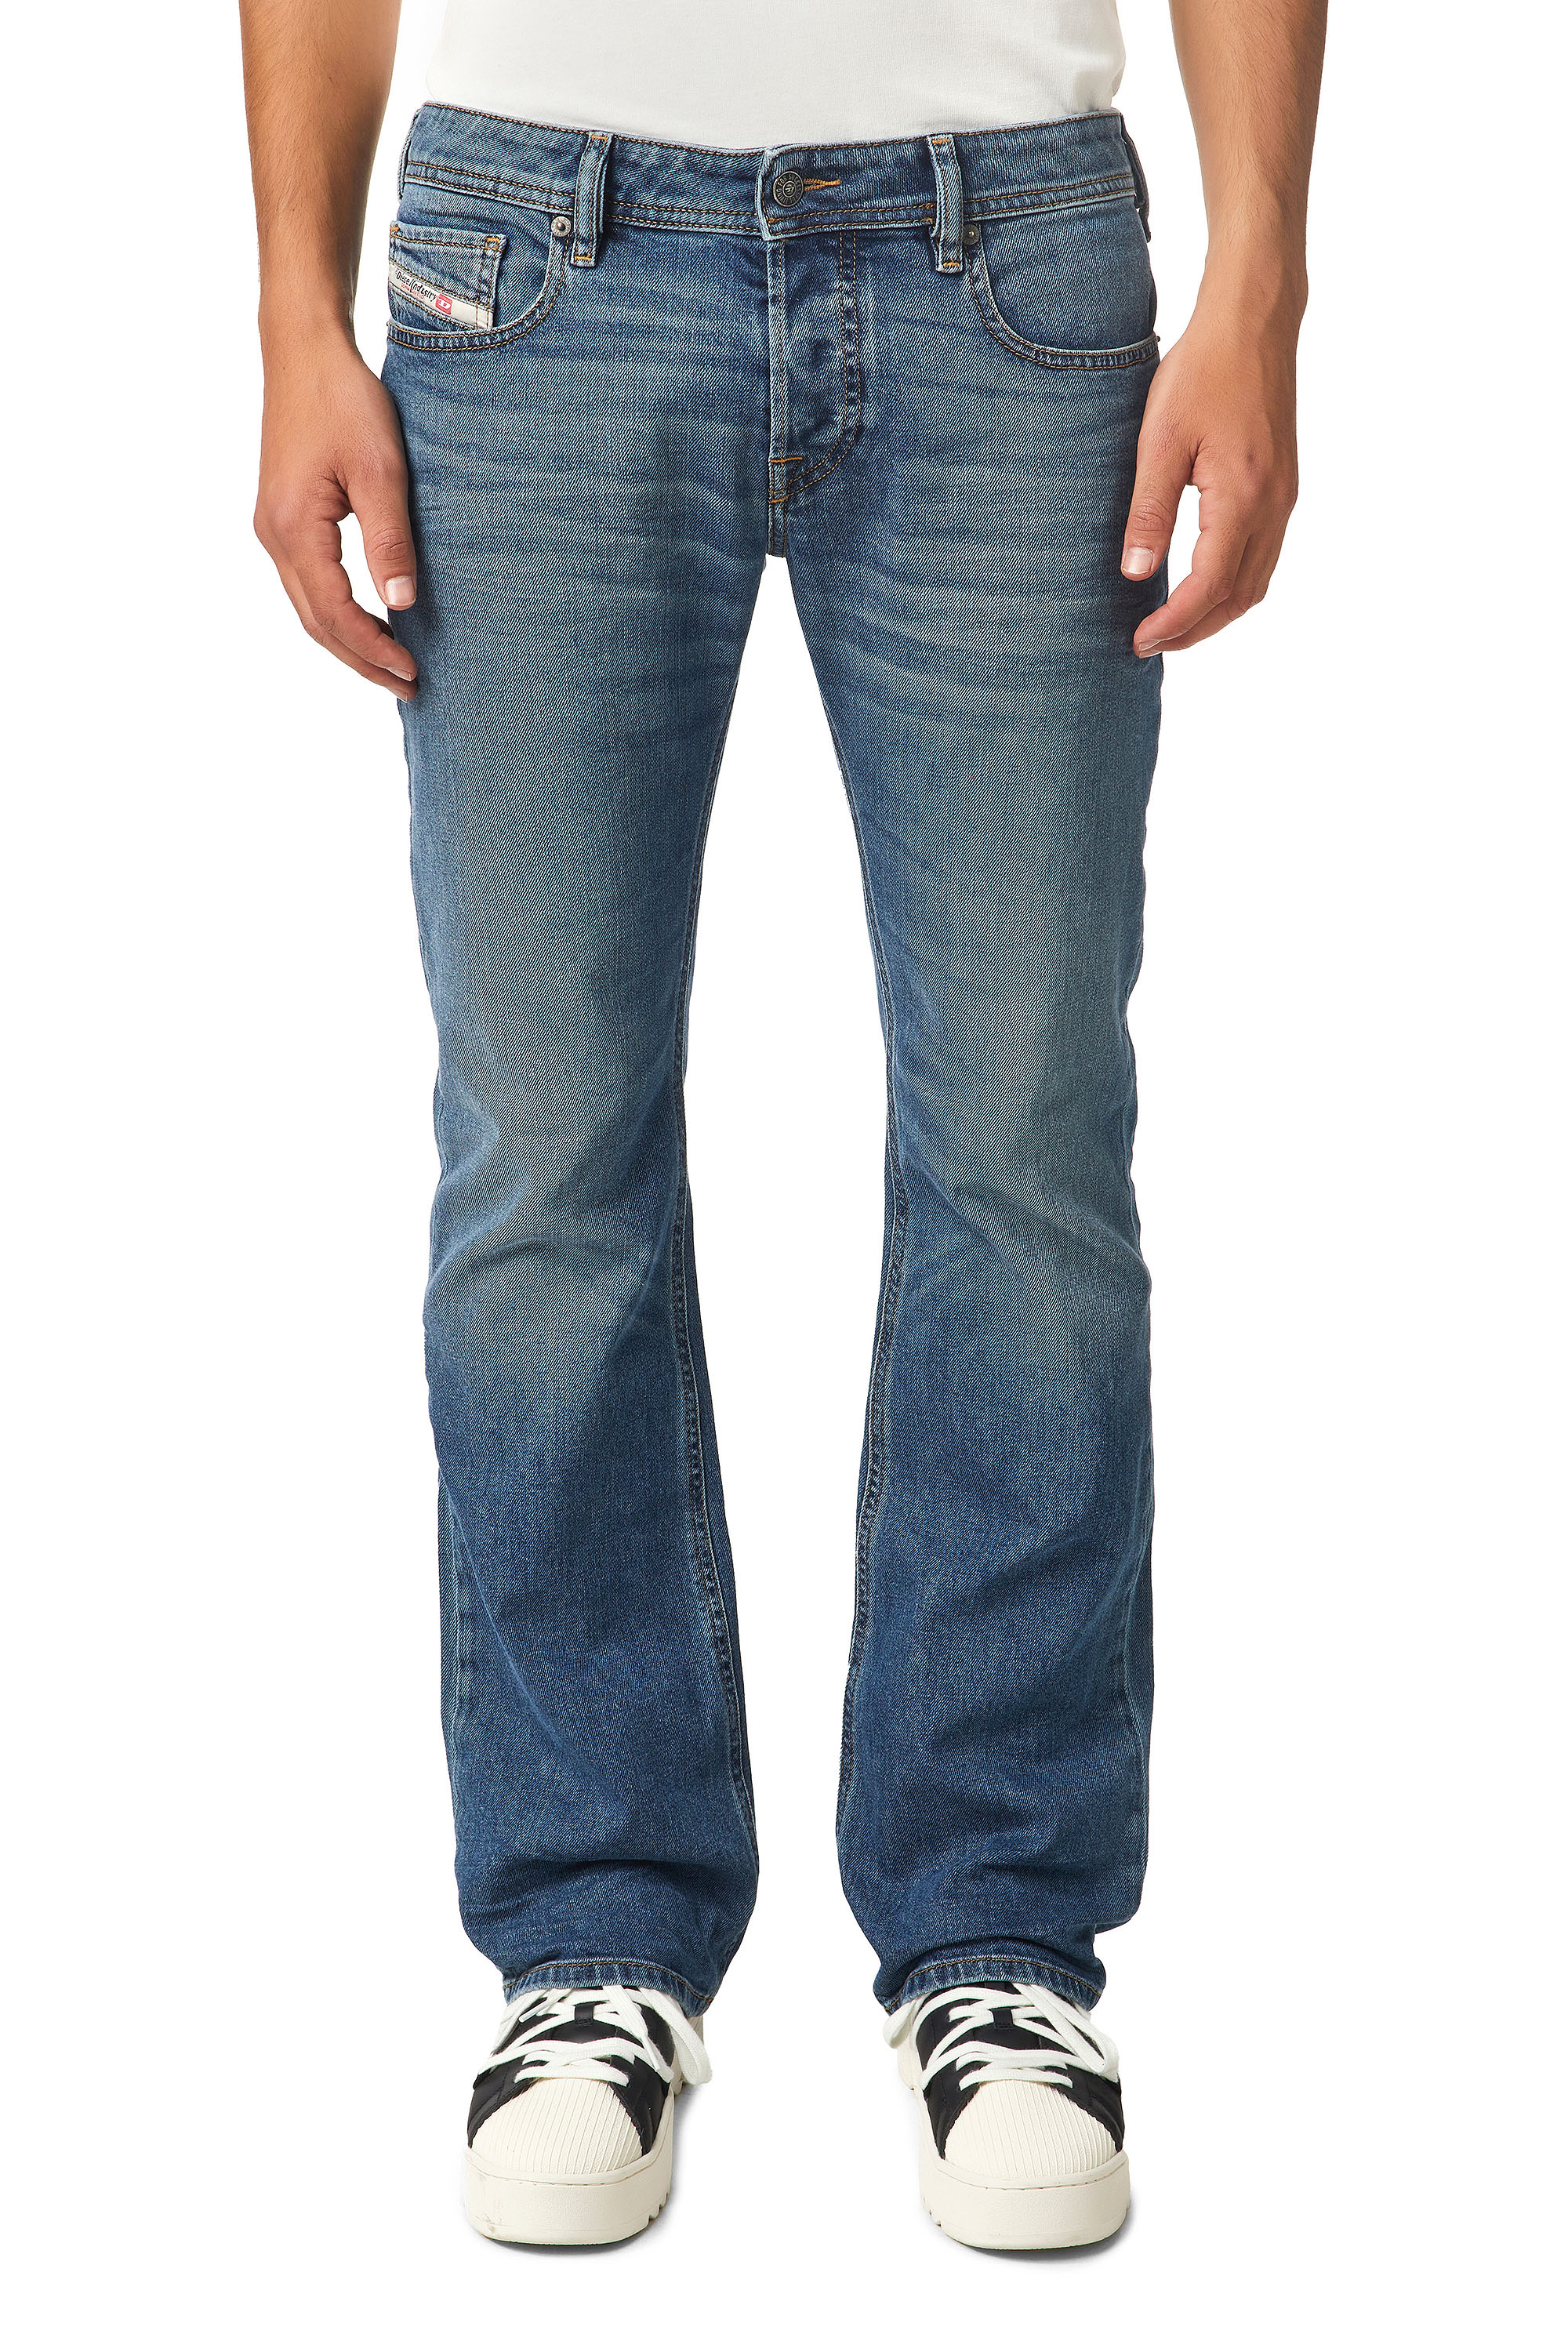 Diesel - Zatiny 009EI Bootcut Jeans,  - Image 2